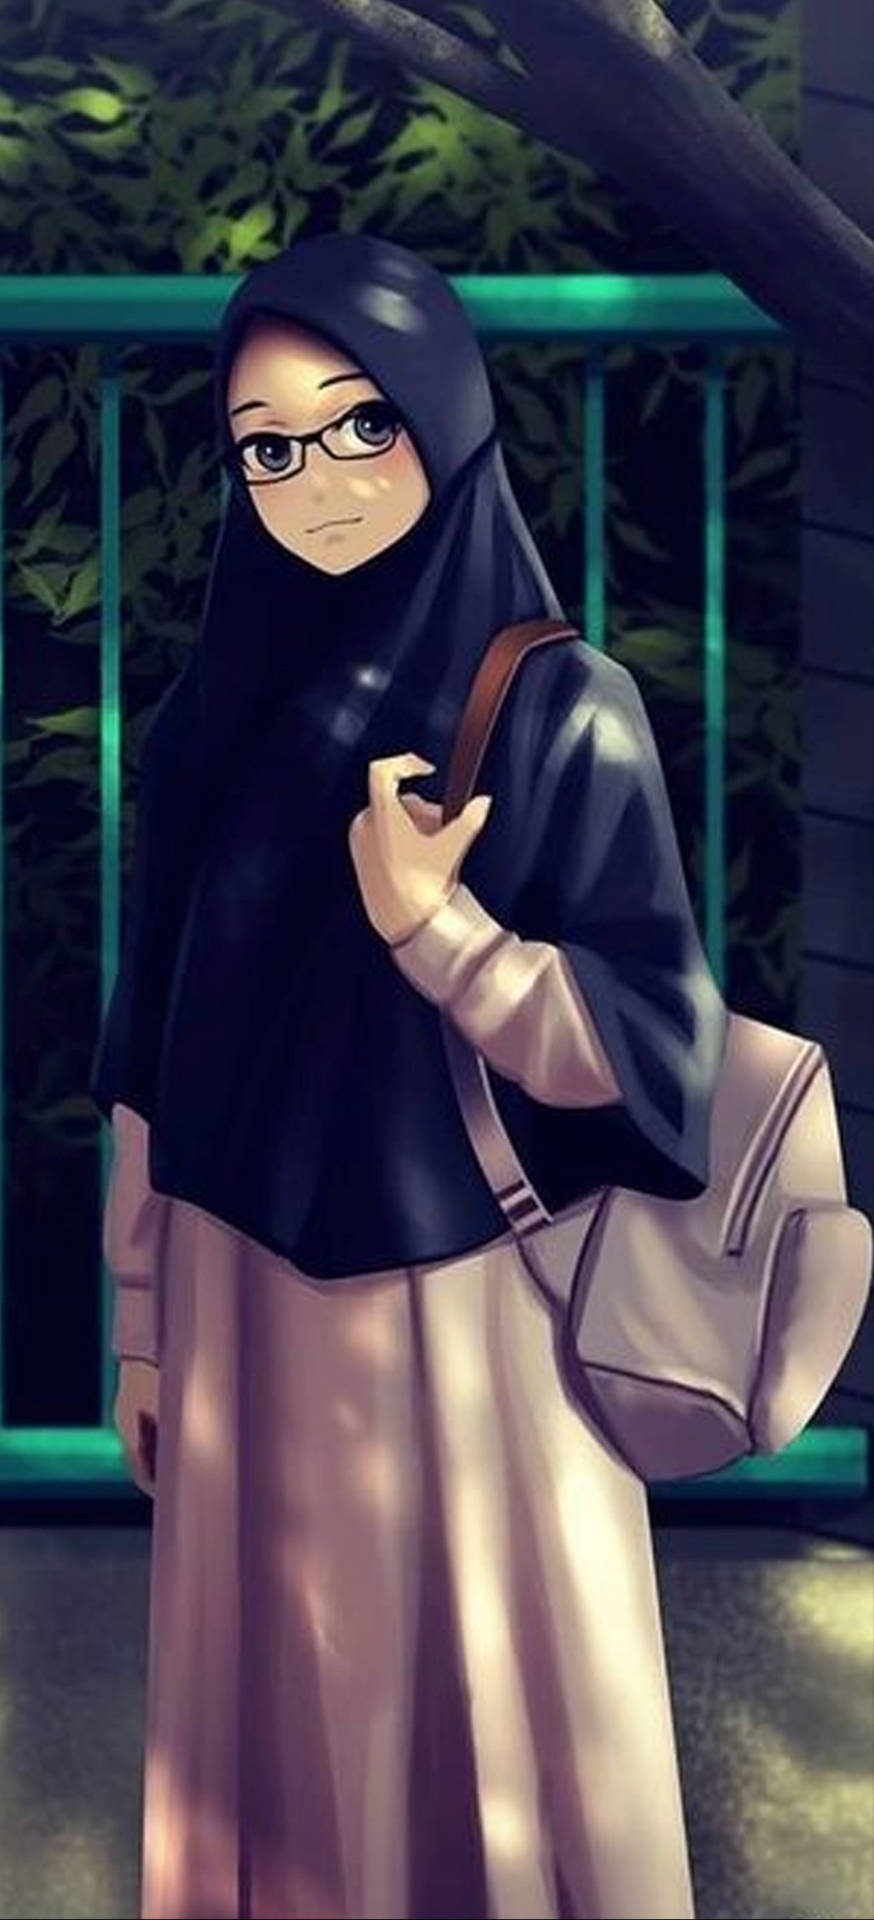 Hijab Cartoon Girl Bagpack Background